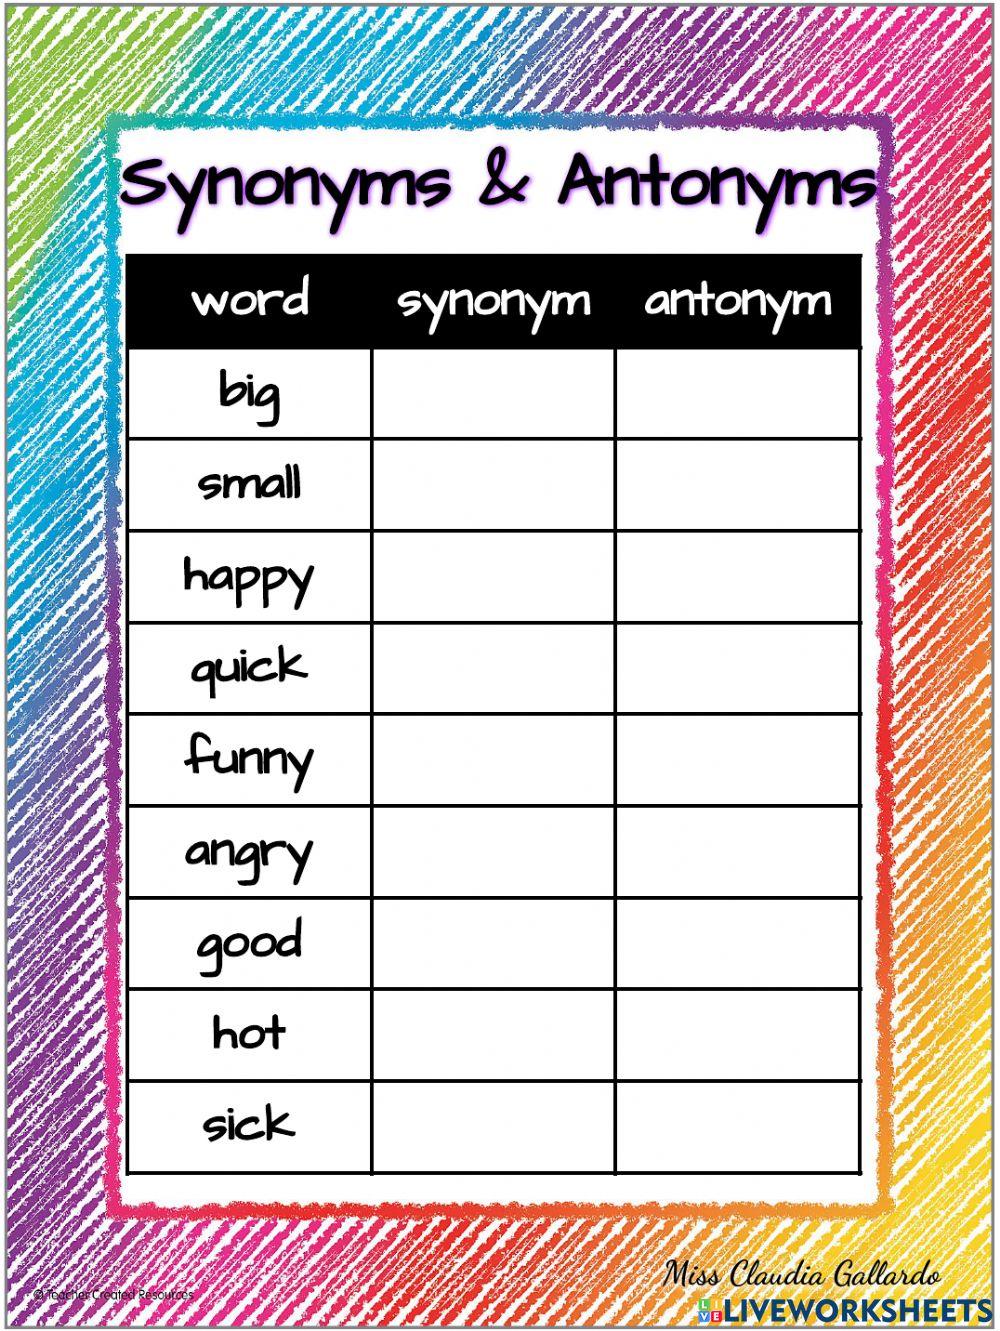 Synonyms & antonyms